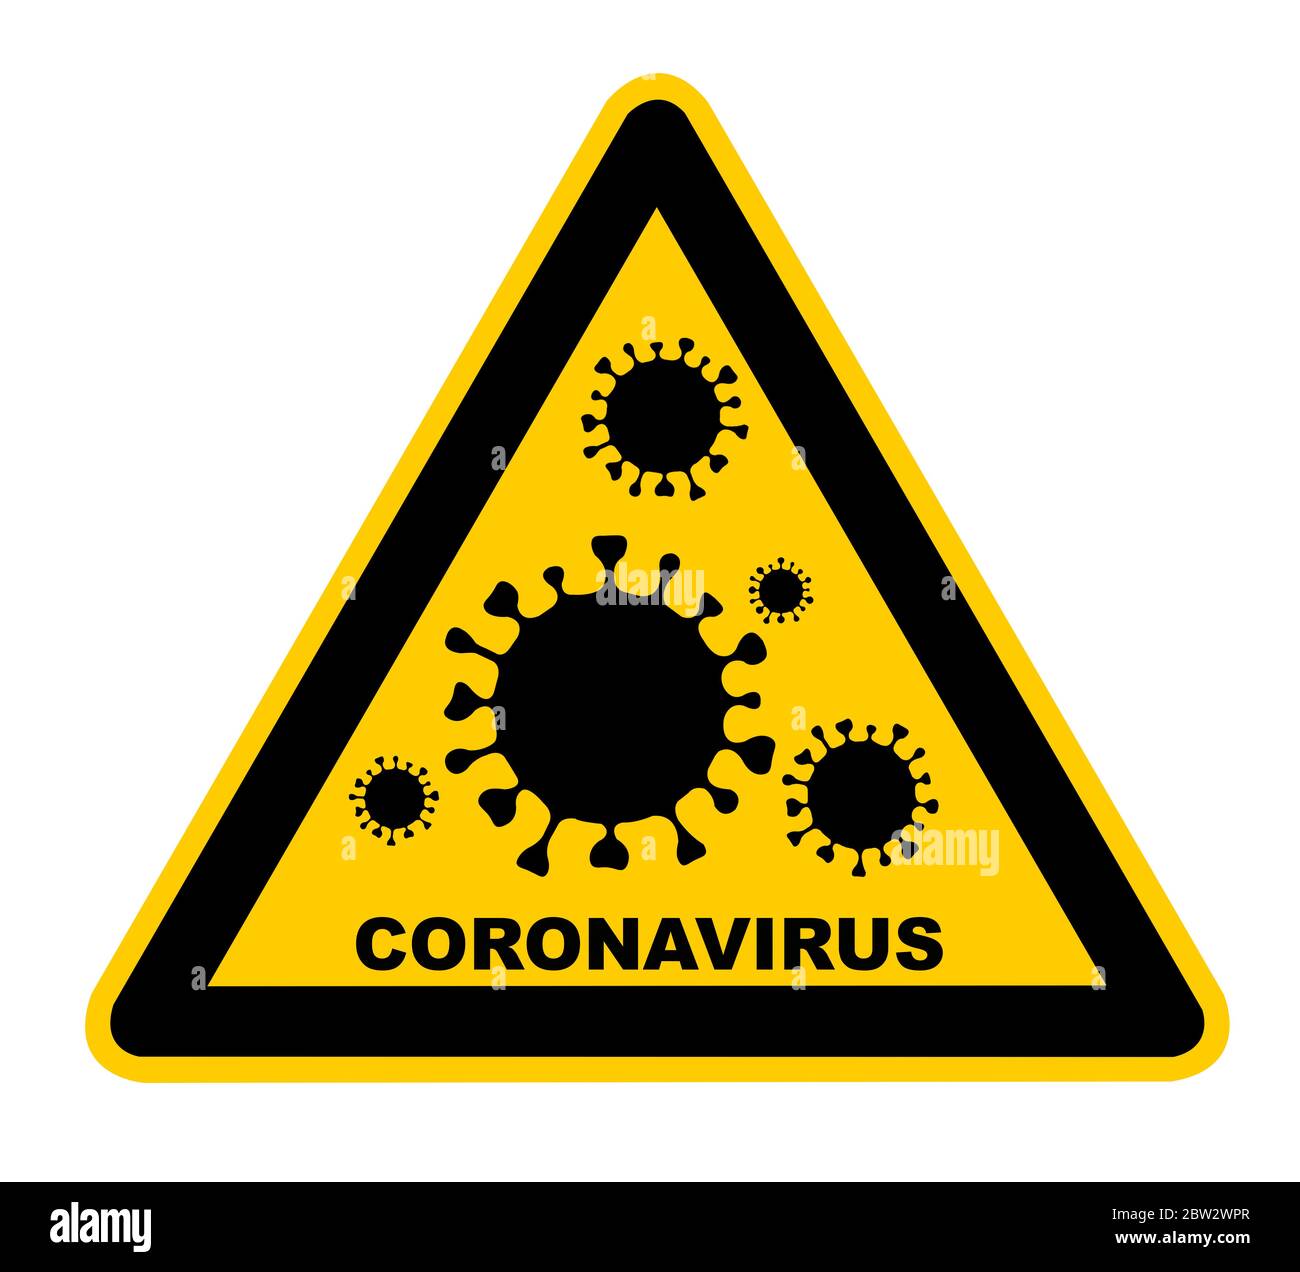 A triangular Coronavirus hazard sign Stock Photo